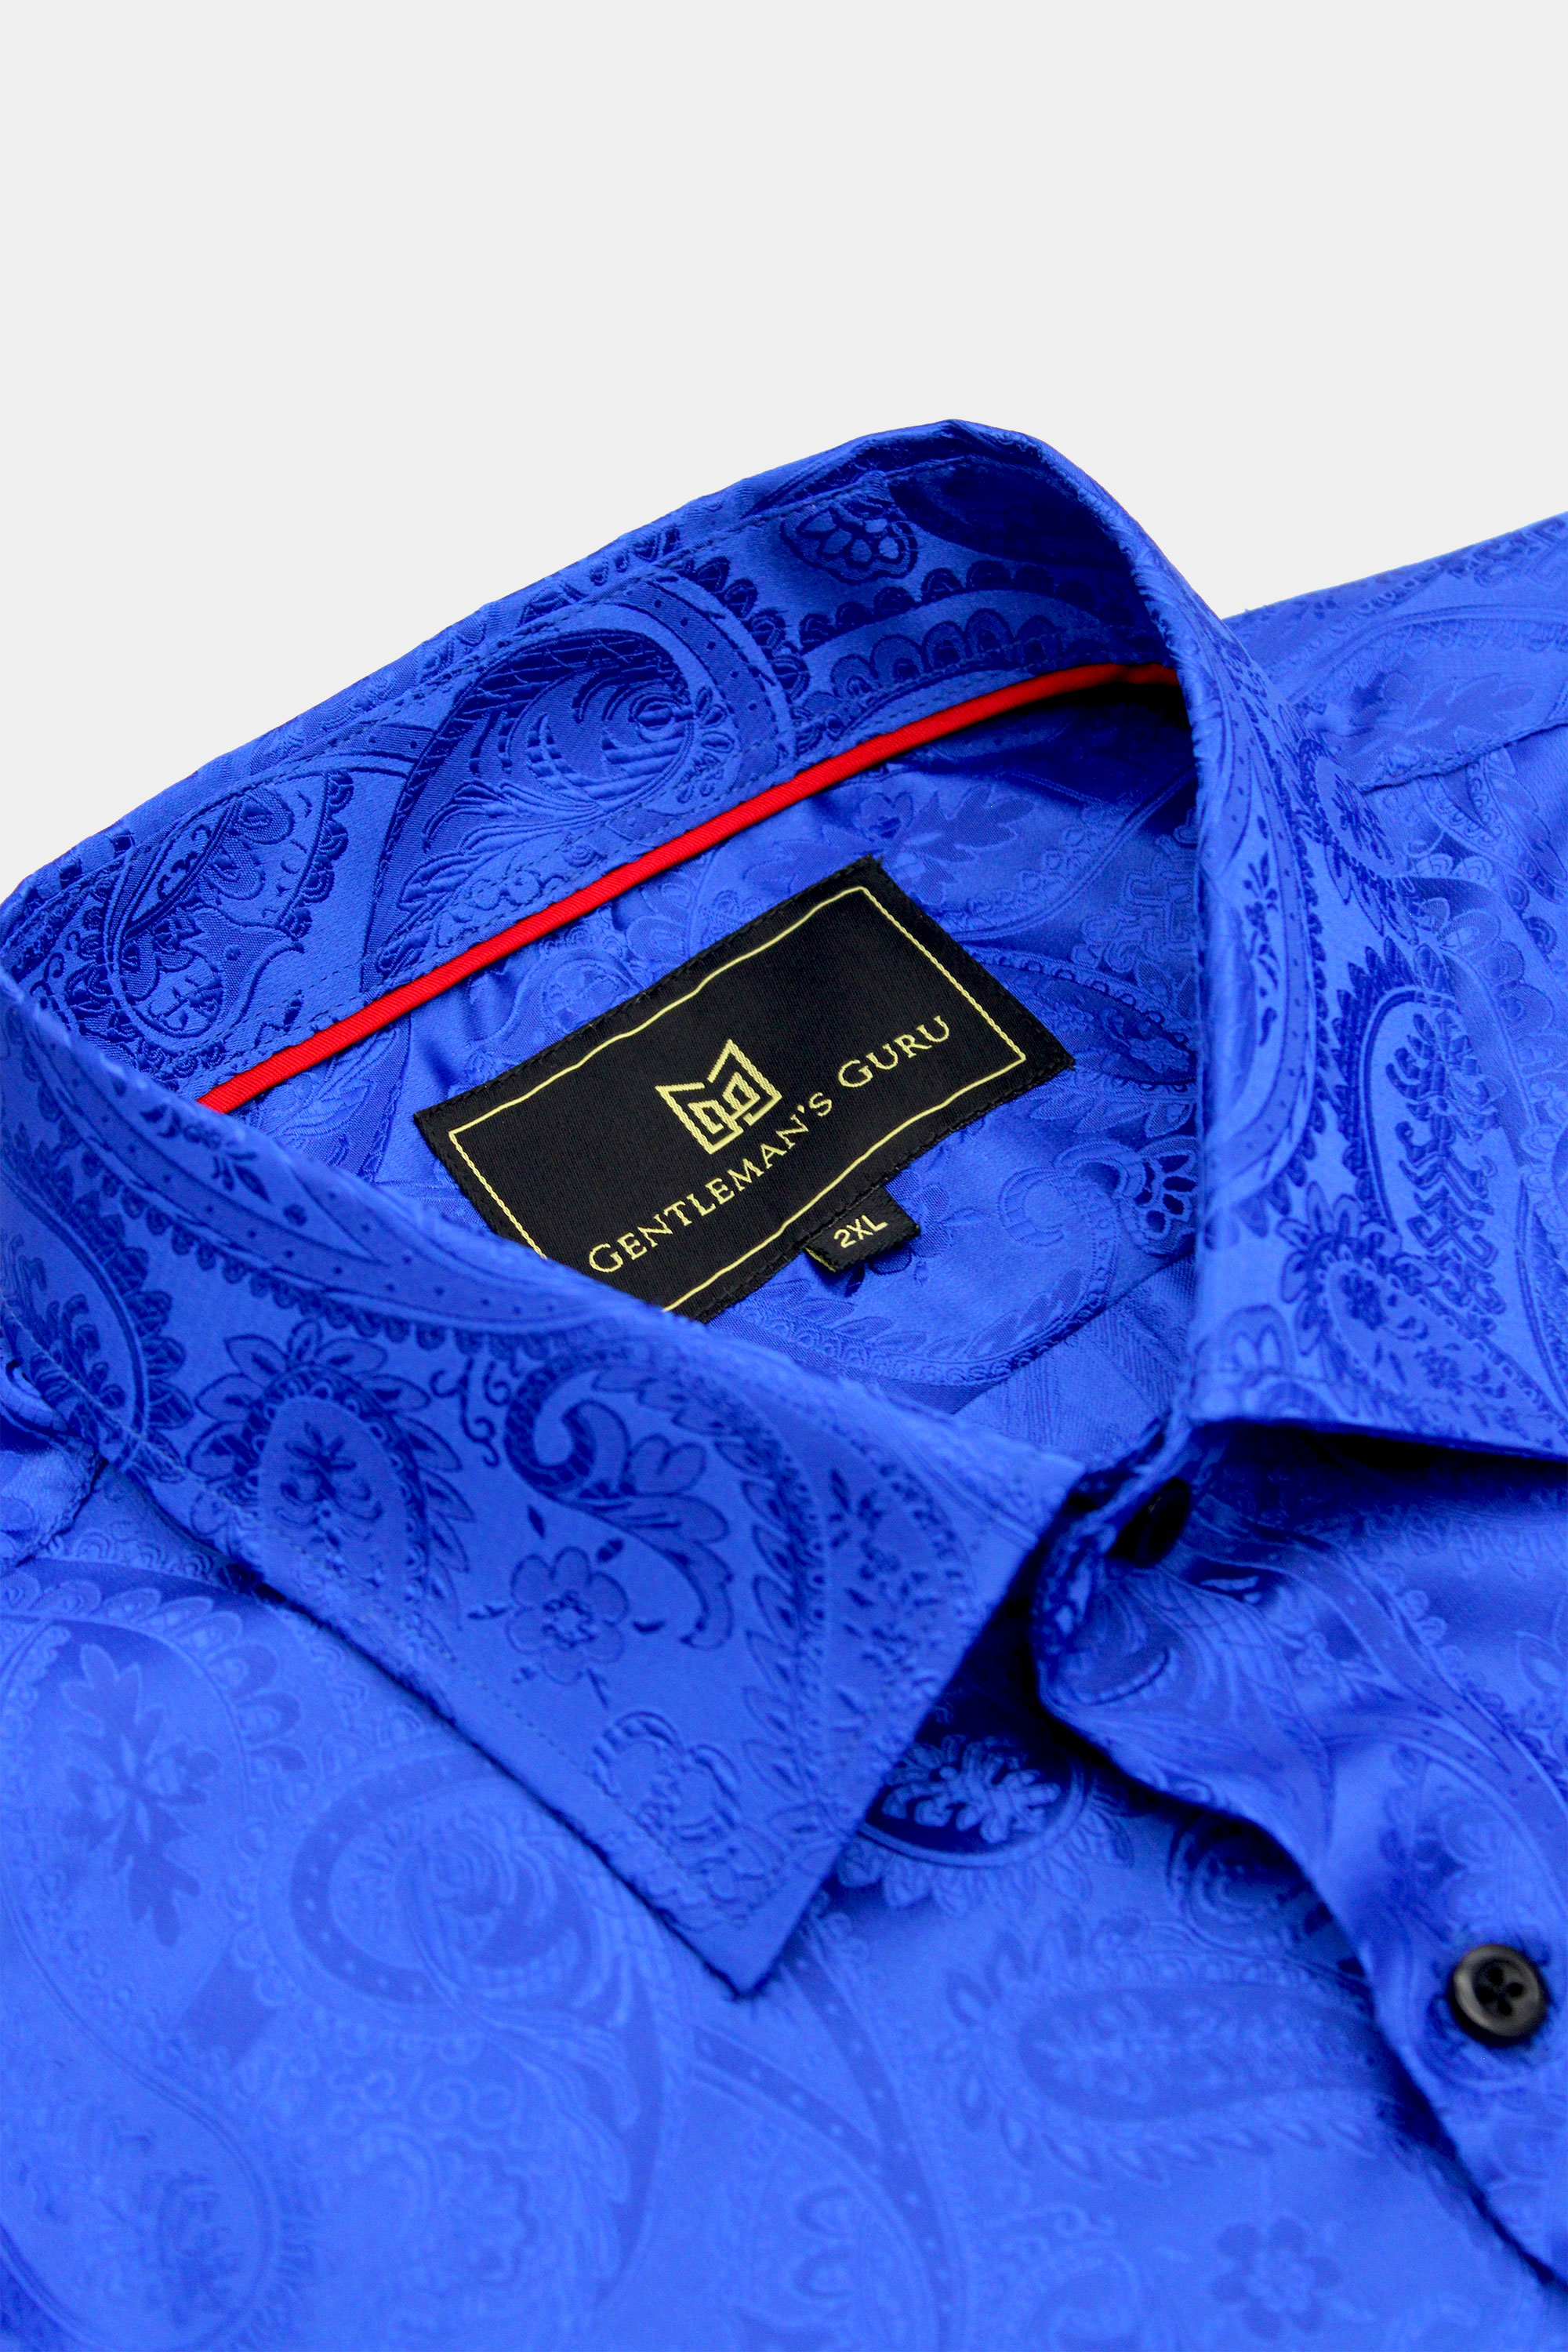 Mens-Long-Sleeve-Royal-Blue-Dress-Shirt-from-Gentlem